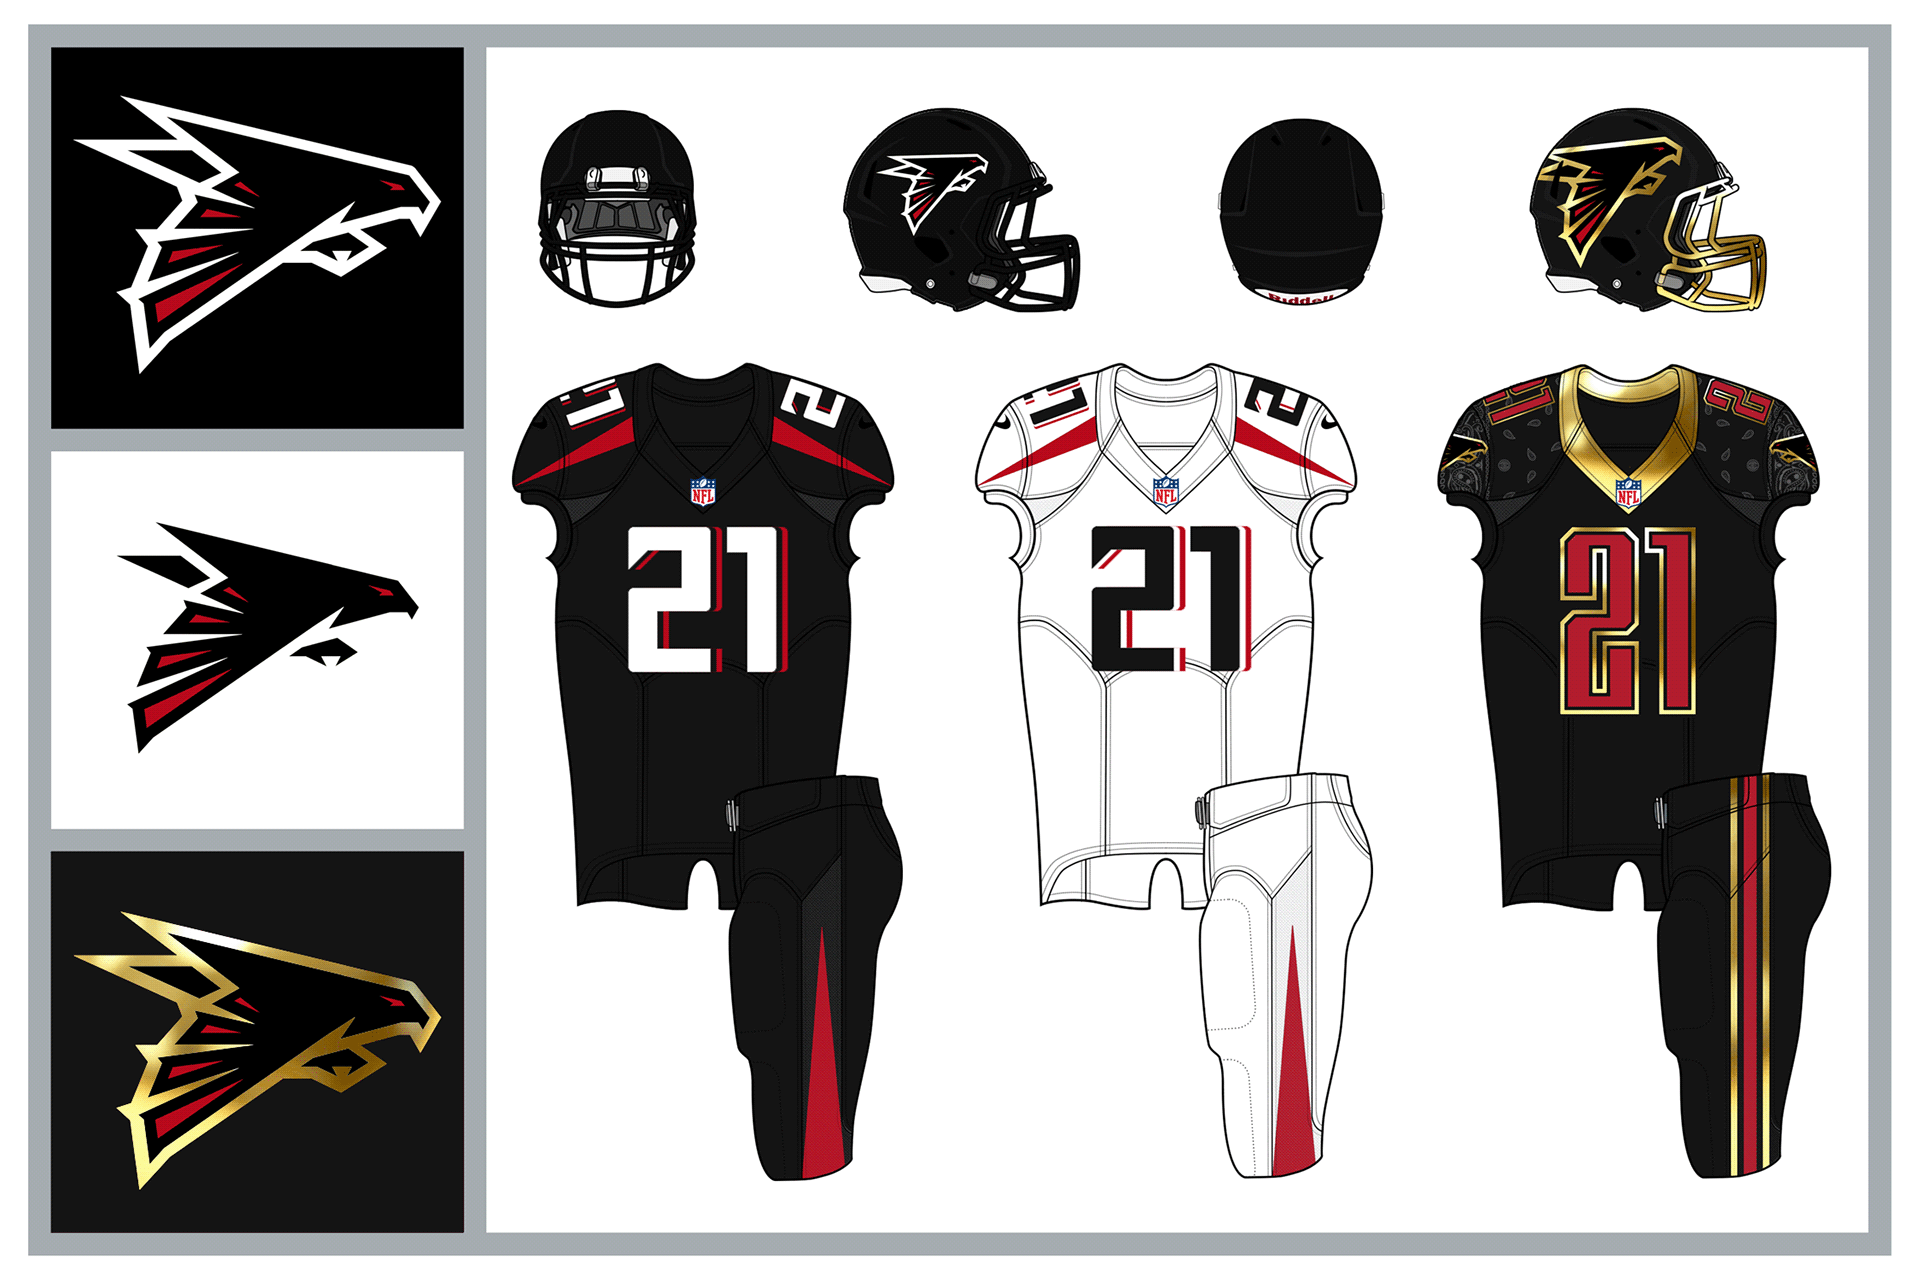 Designer Rebrands Every NFL Team, Complete With New Logo & Uniform